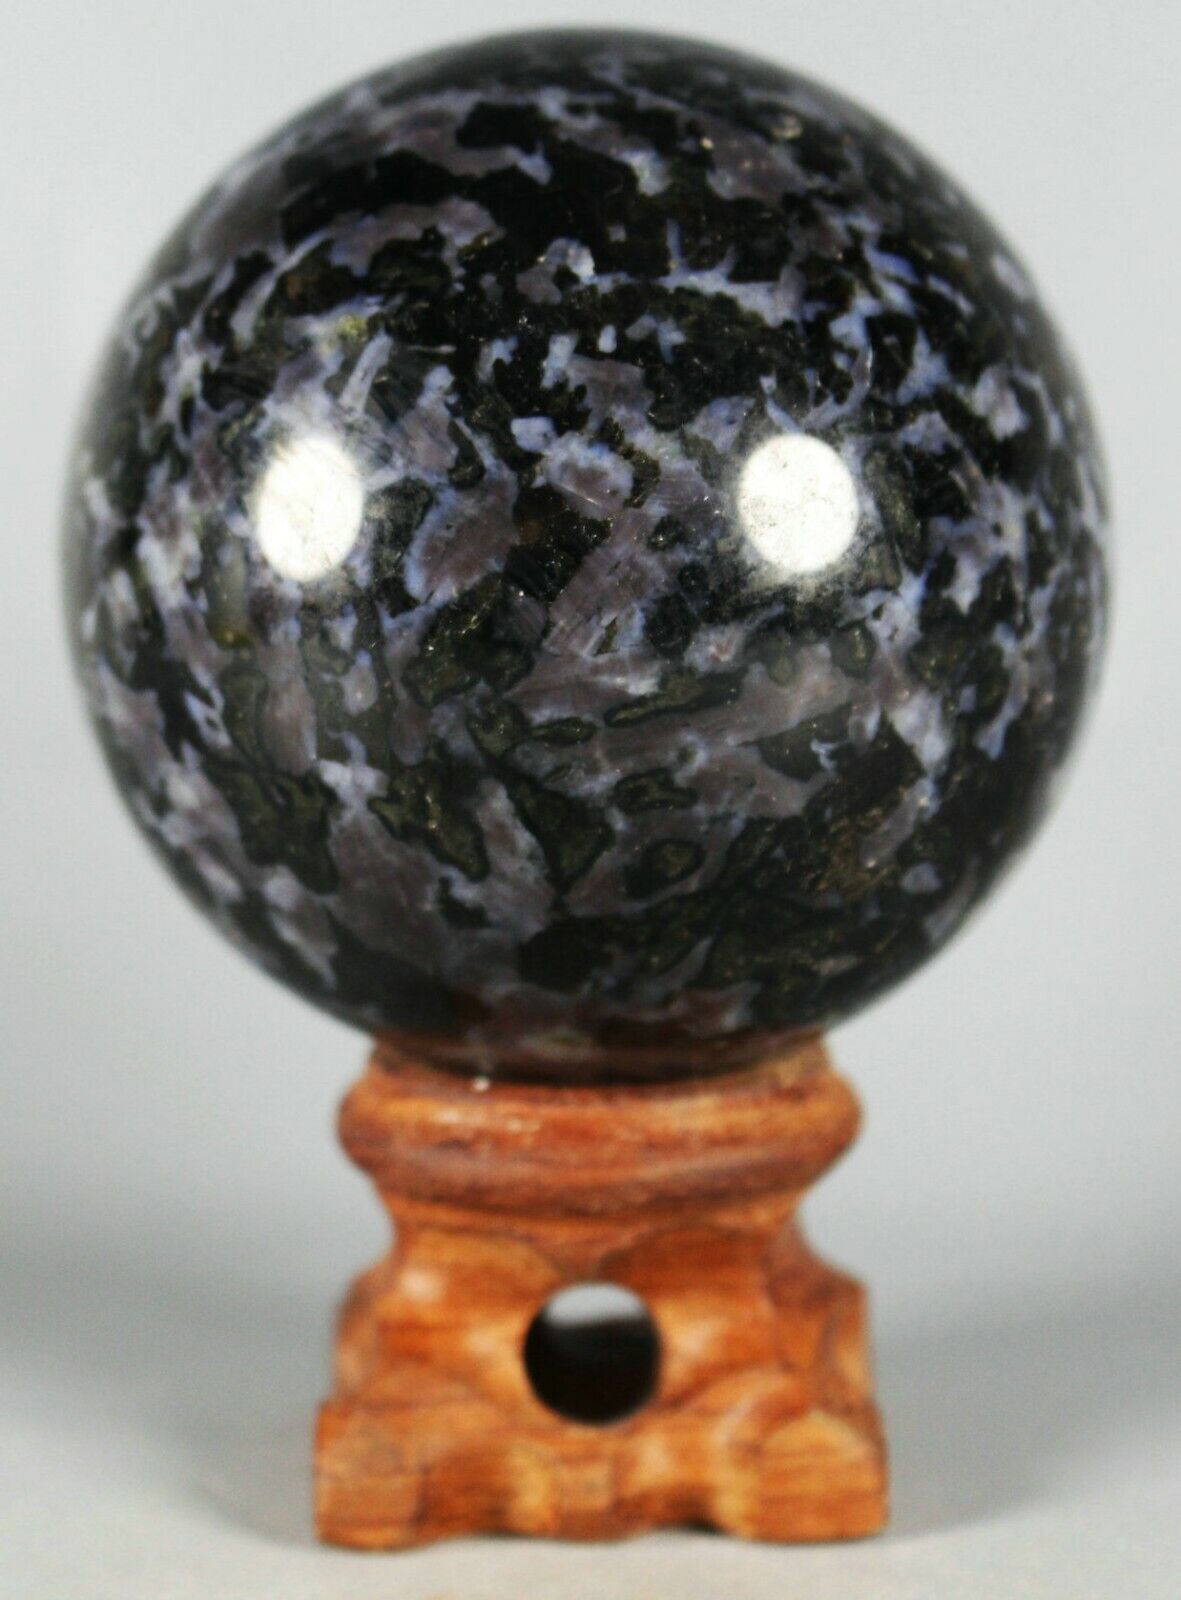 280g Large MERLINITE Mystic Tumbled Ball Stone Magic Shaman Psilomelane Gabbro